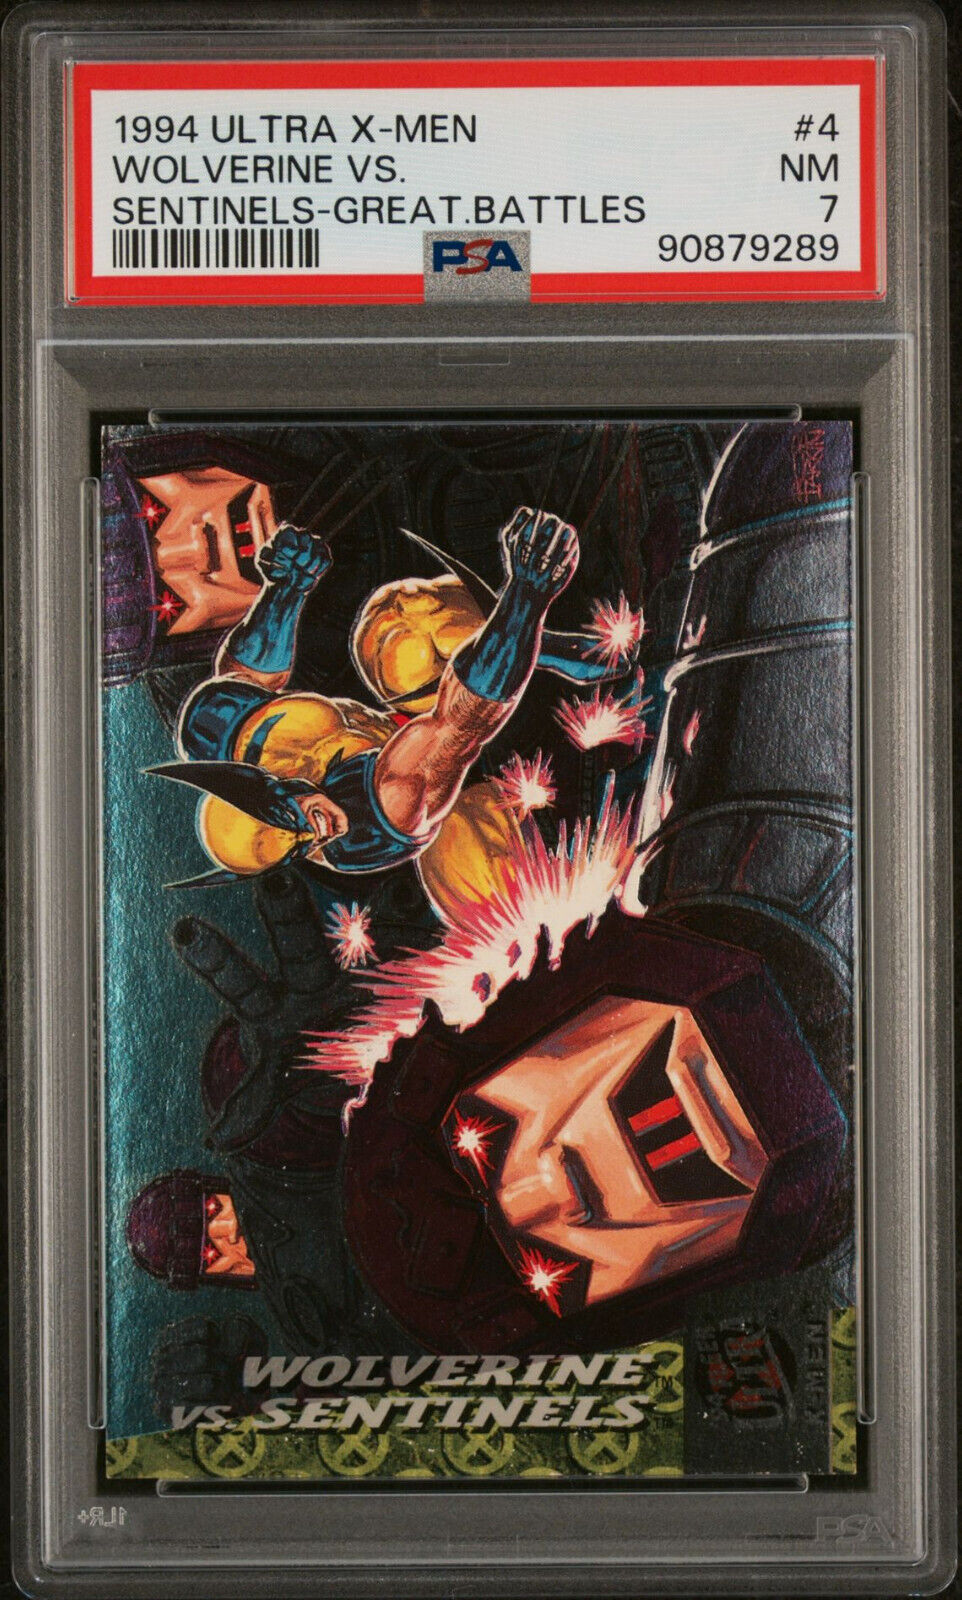 1994 Ultra X-Men Greatest Battles #4 Wolverine vs Sentinels PSA 7 NM